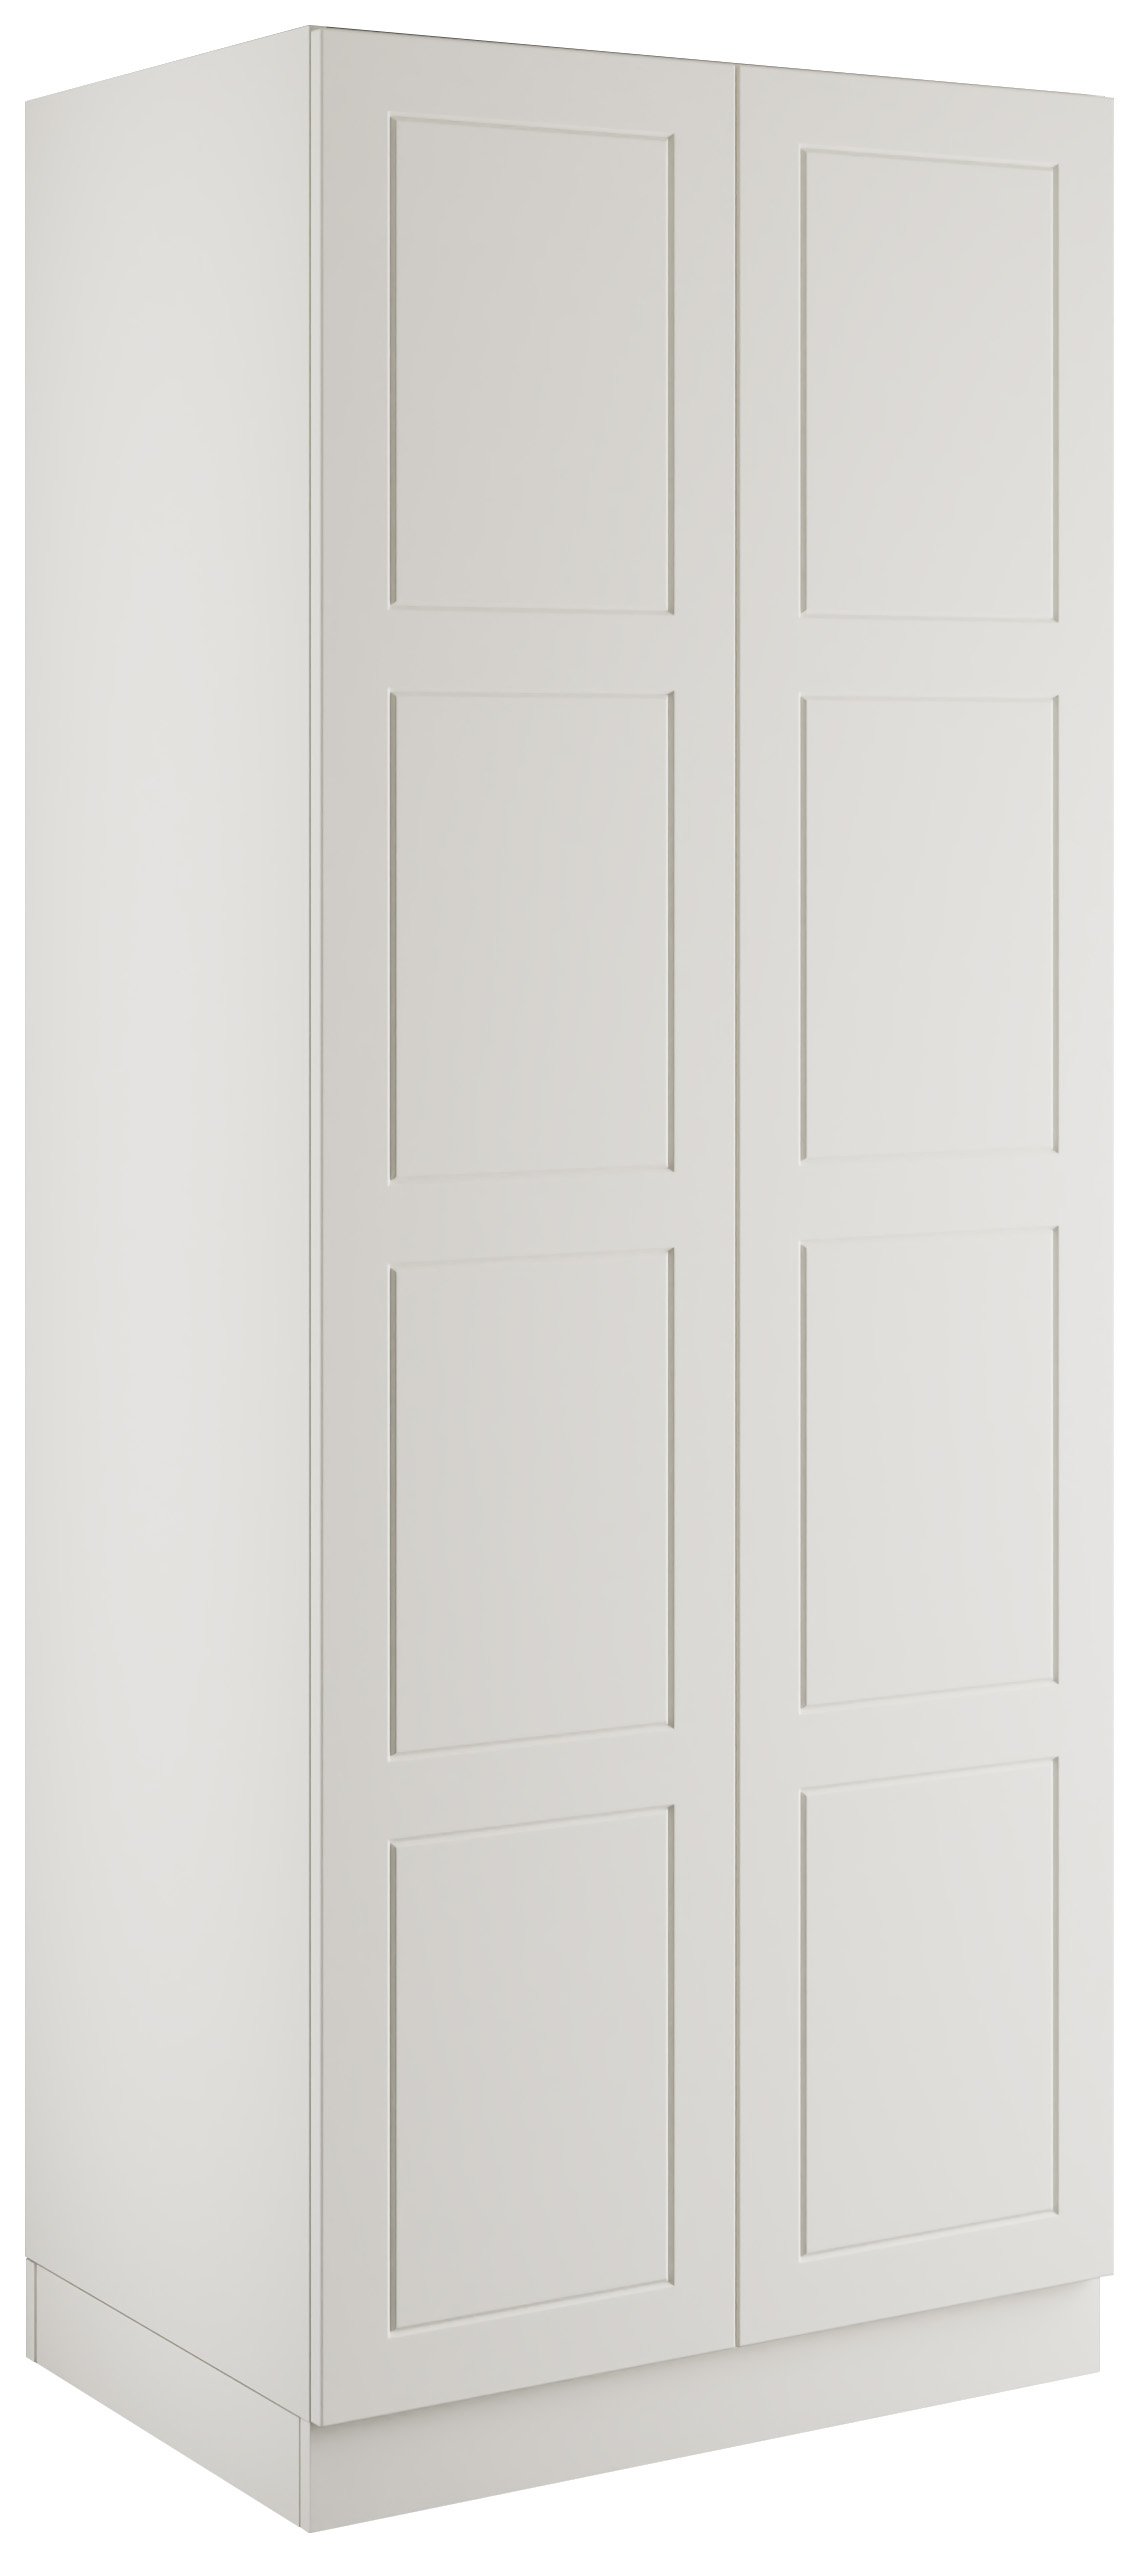 Bramham White Double Wardrobe with Single Rail - 900 x 2260 x 608mm